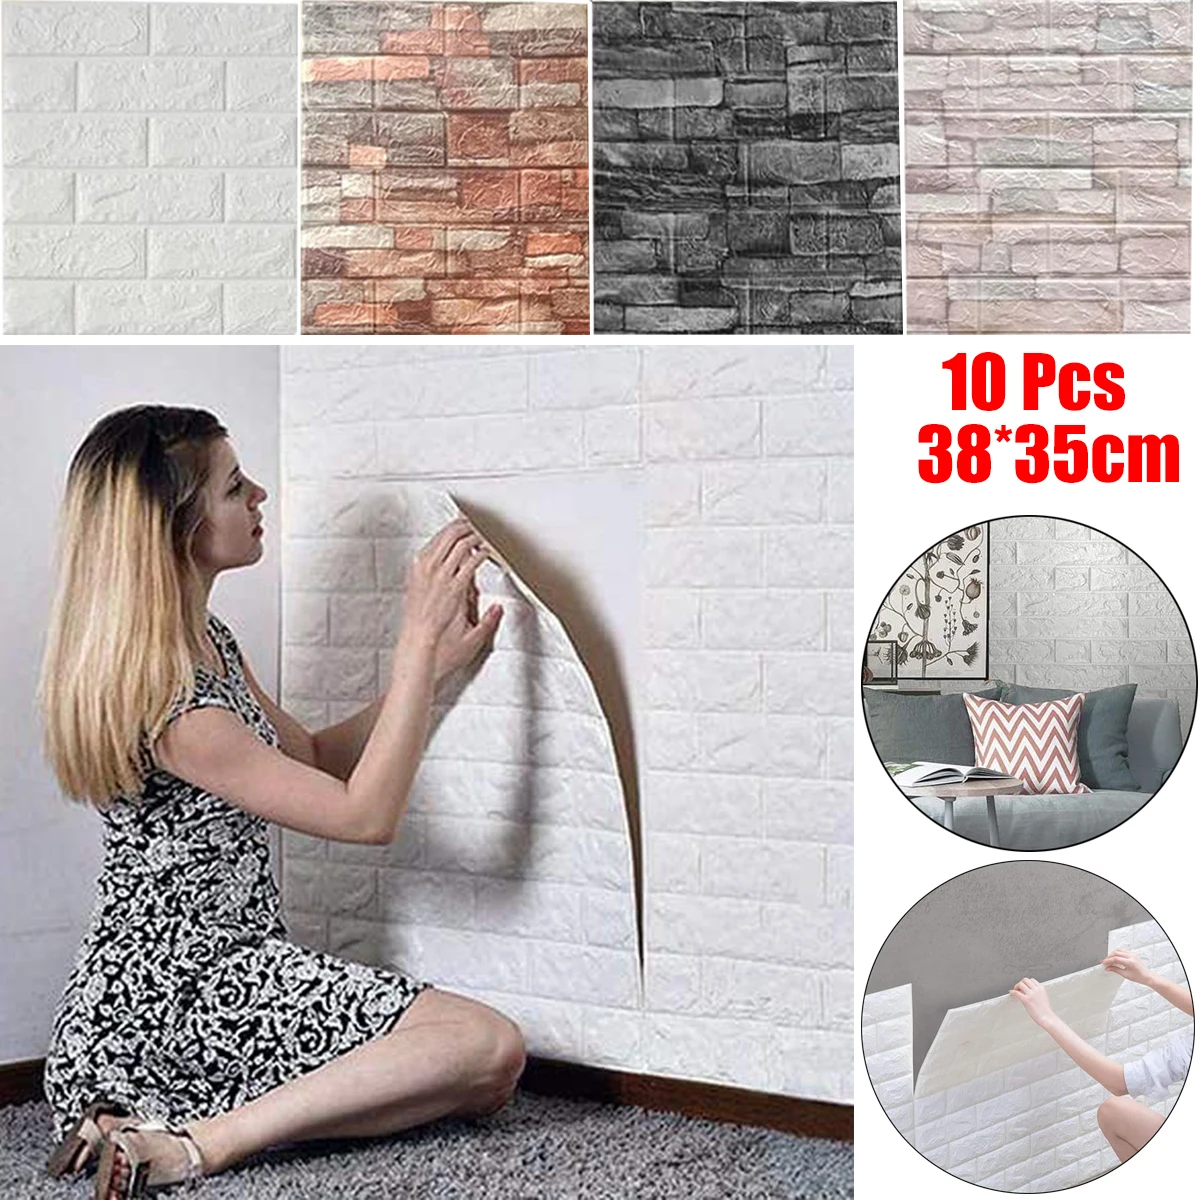 10 Pcs Self Adhesive Panels Foam Wall Wallpaper Peel and Stick Stone Wallpaper for Living Room Kids Bedroom Decoration 38*35cm